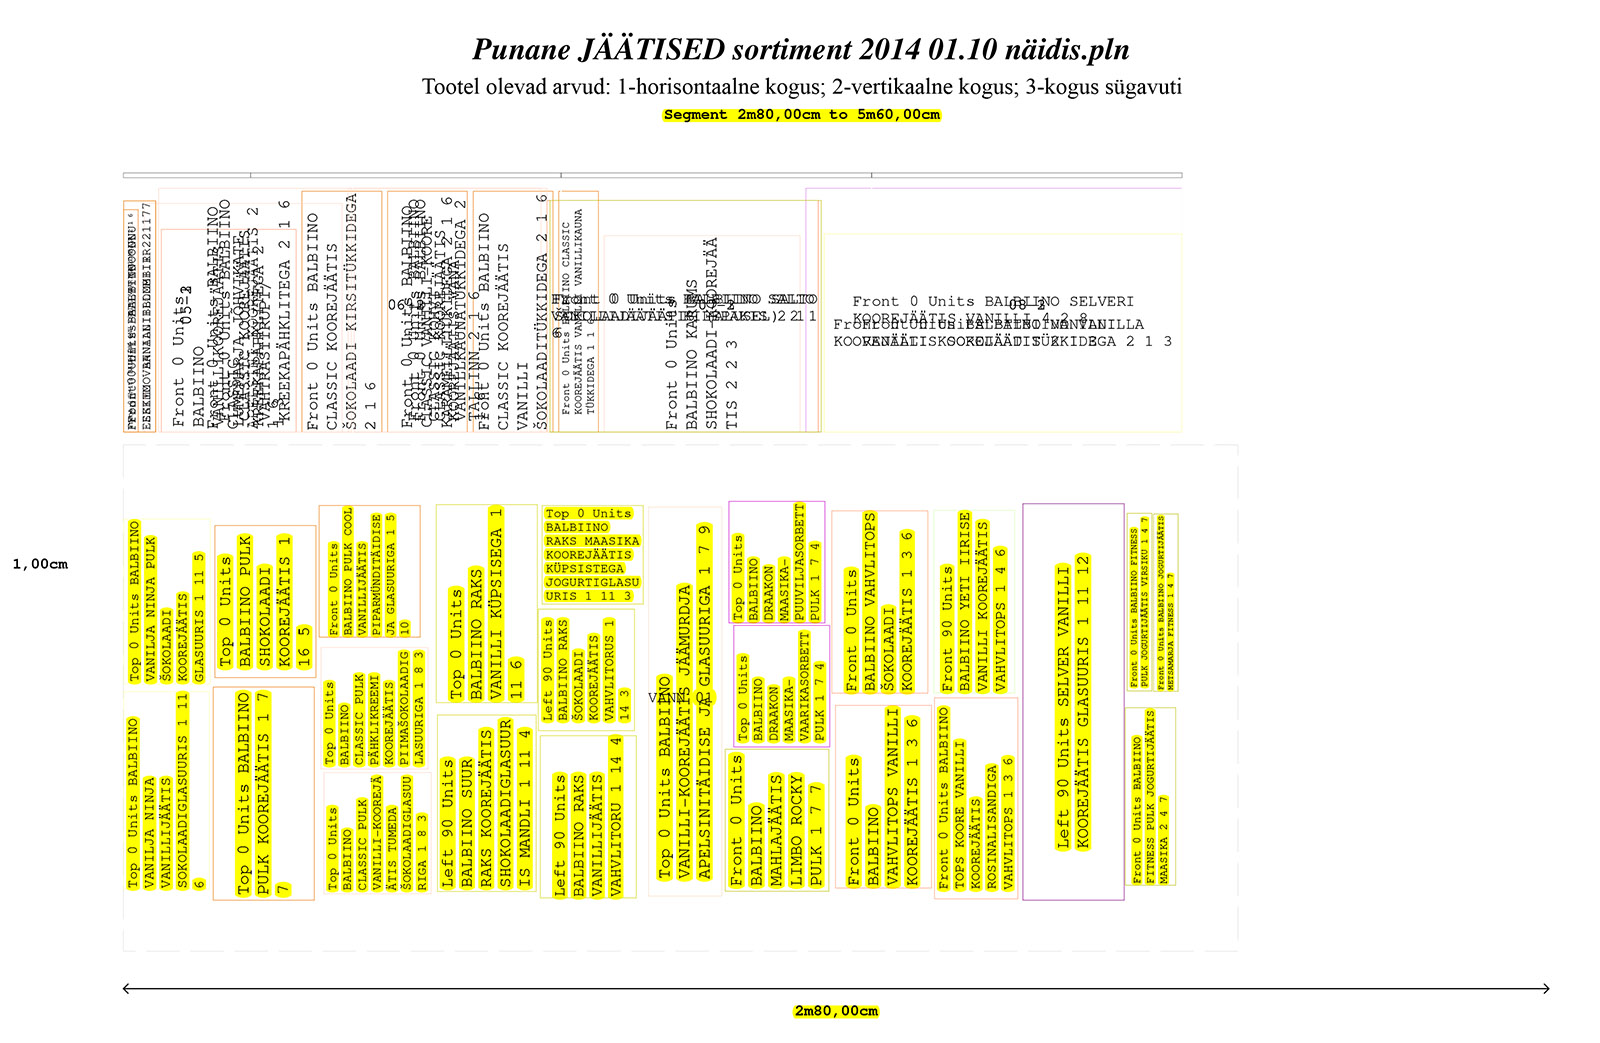 (Punane J304304TISED sortiment 2014 01.10 n344idis.pln)